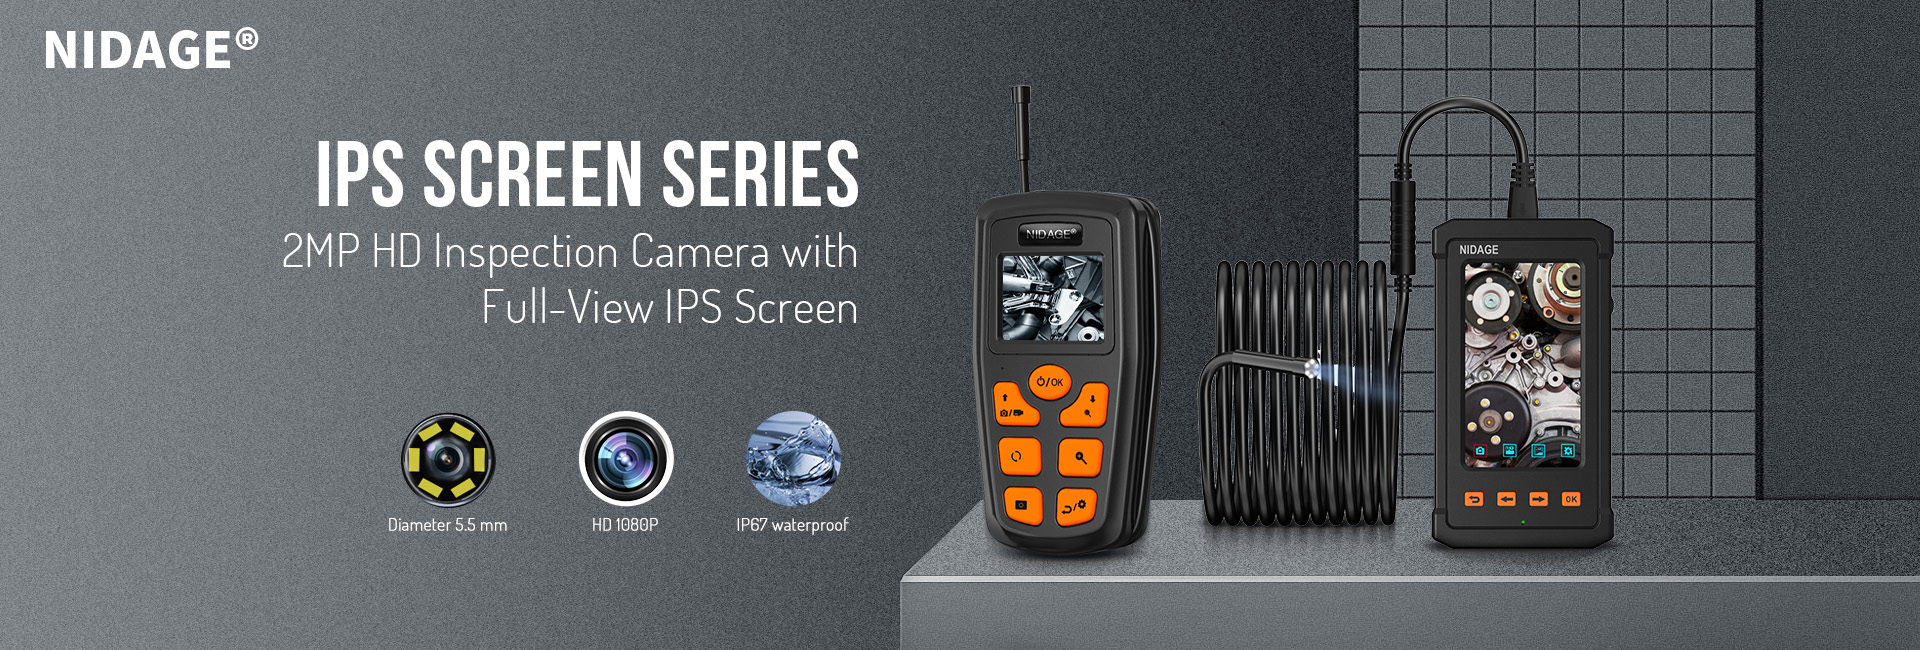 IPS HD Screen Industrial Endoscope